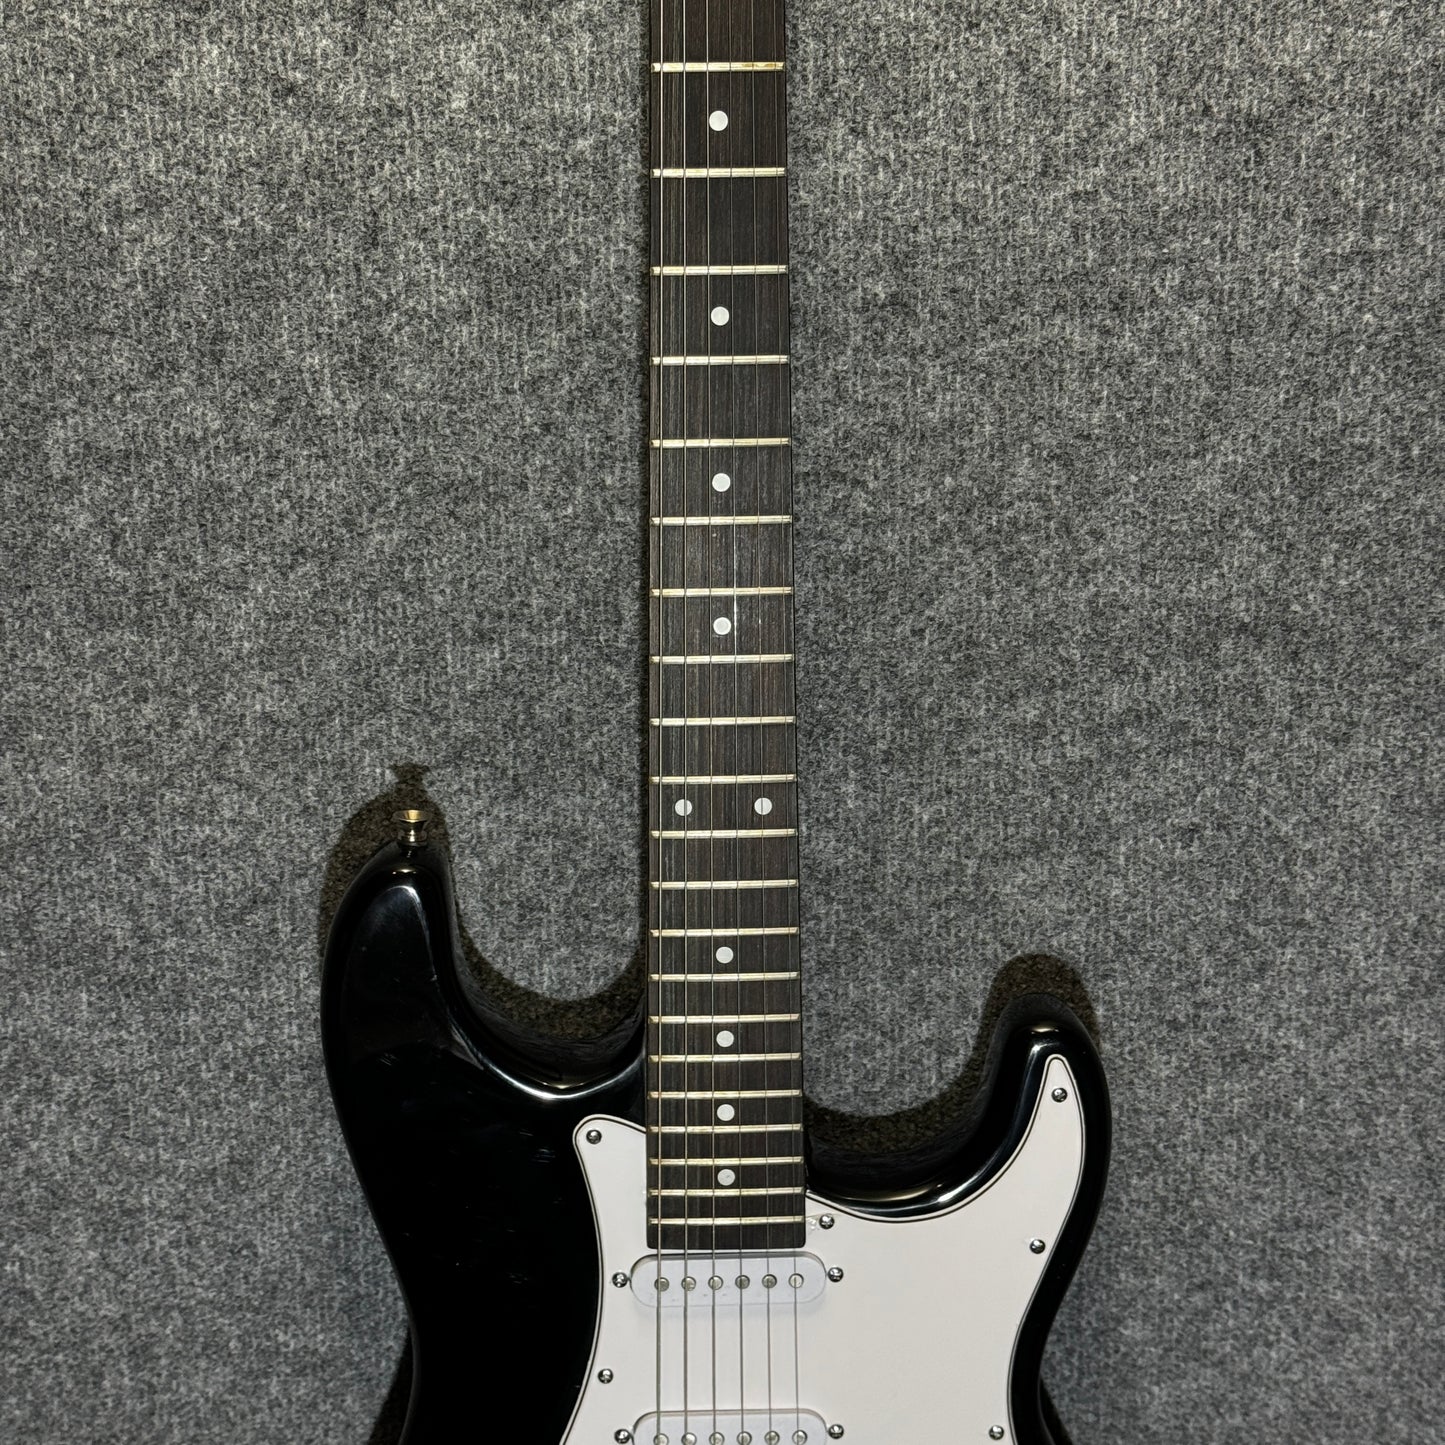 Encore E60 S Type Electric Guitar